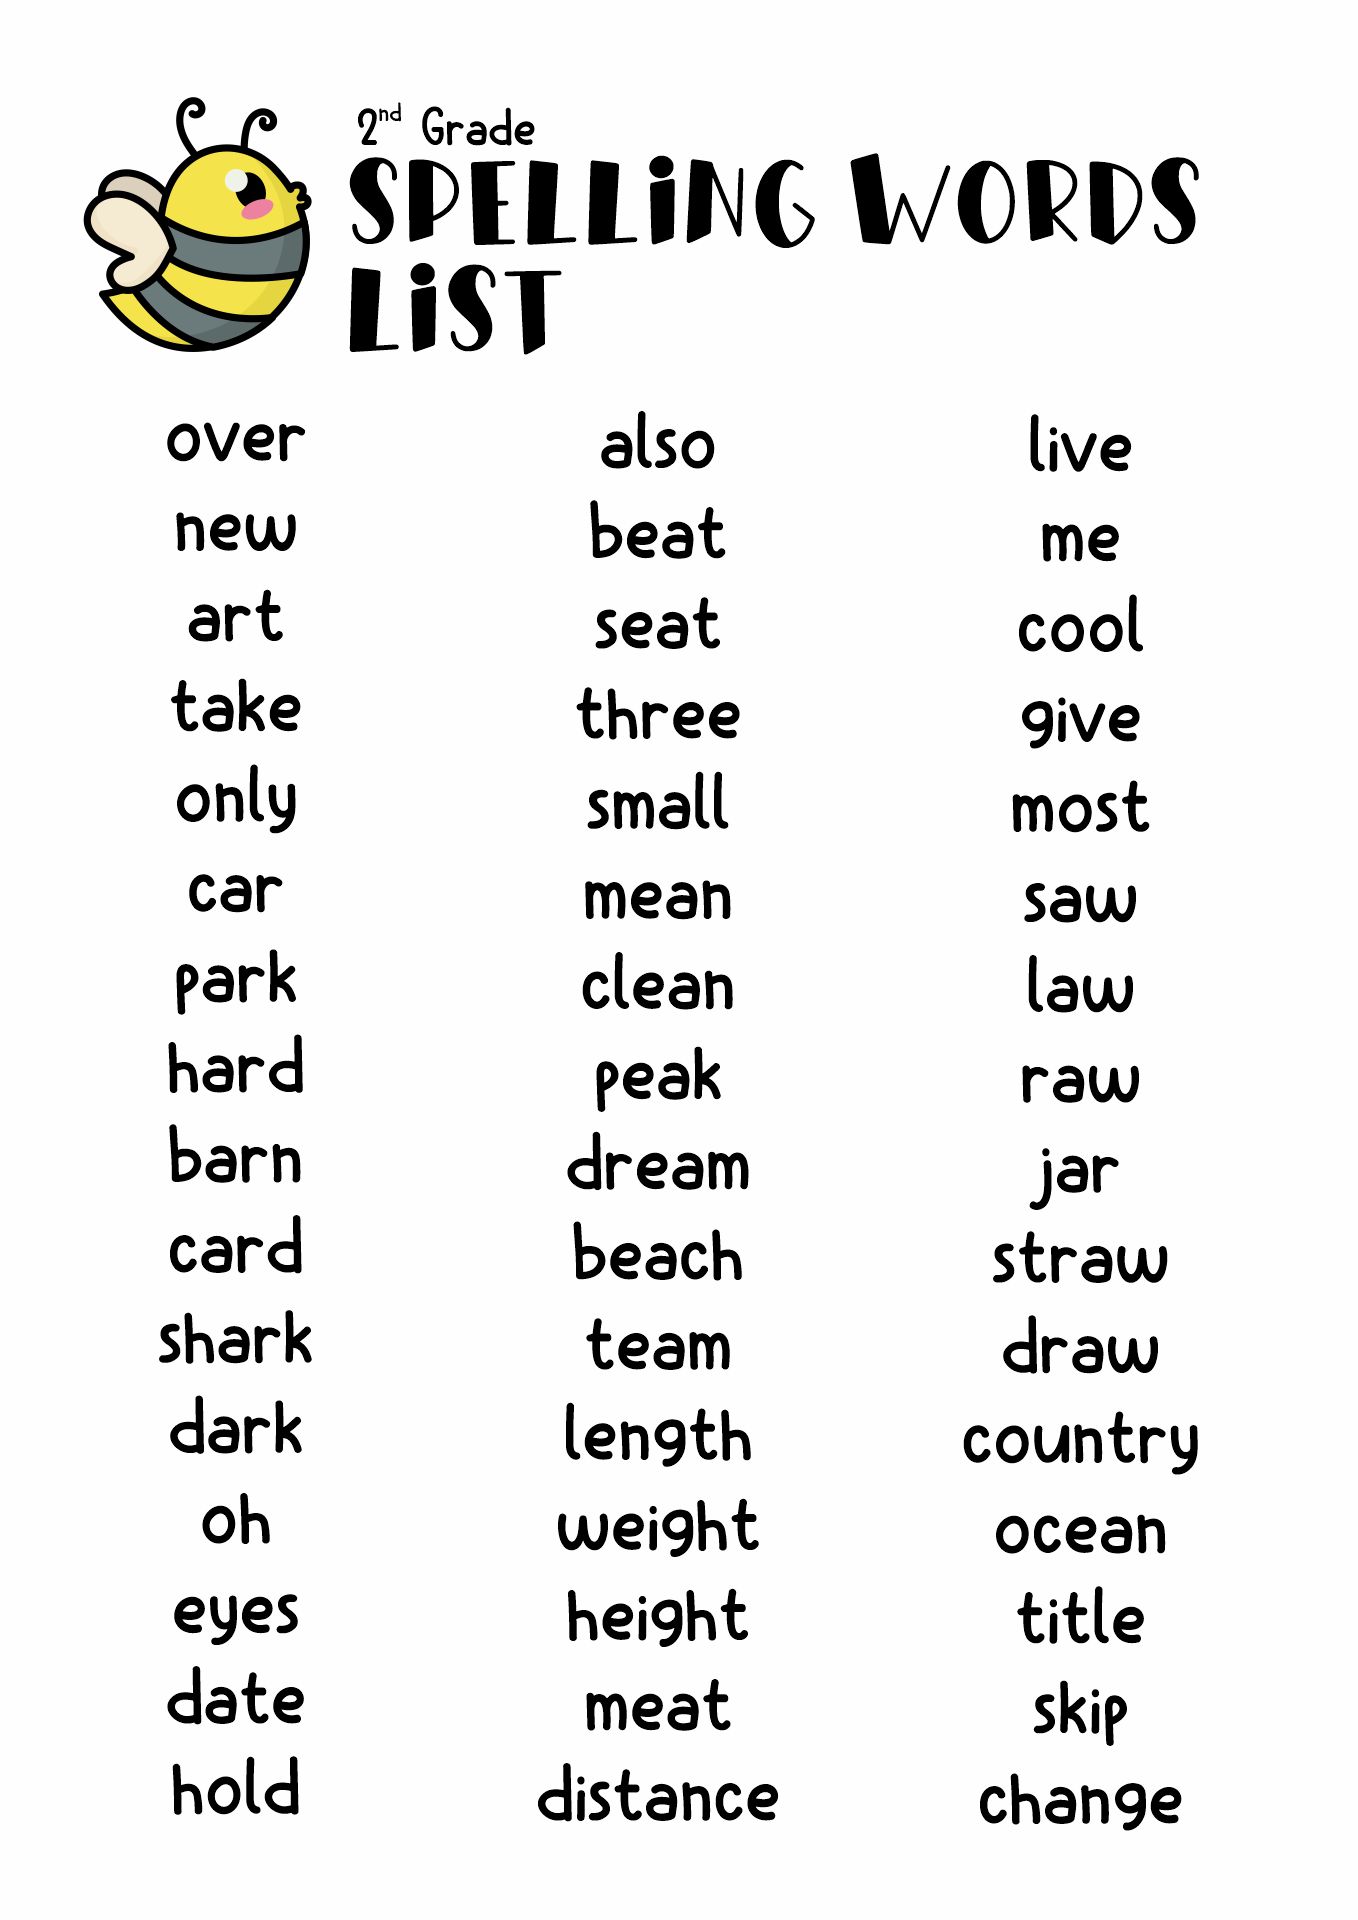 2nd Grade Spelling Words Image